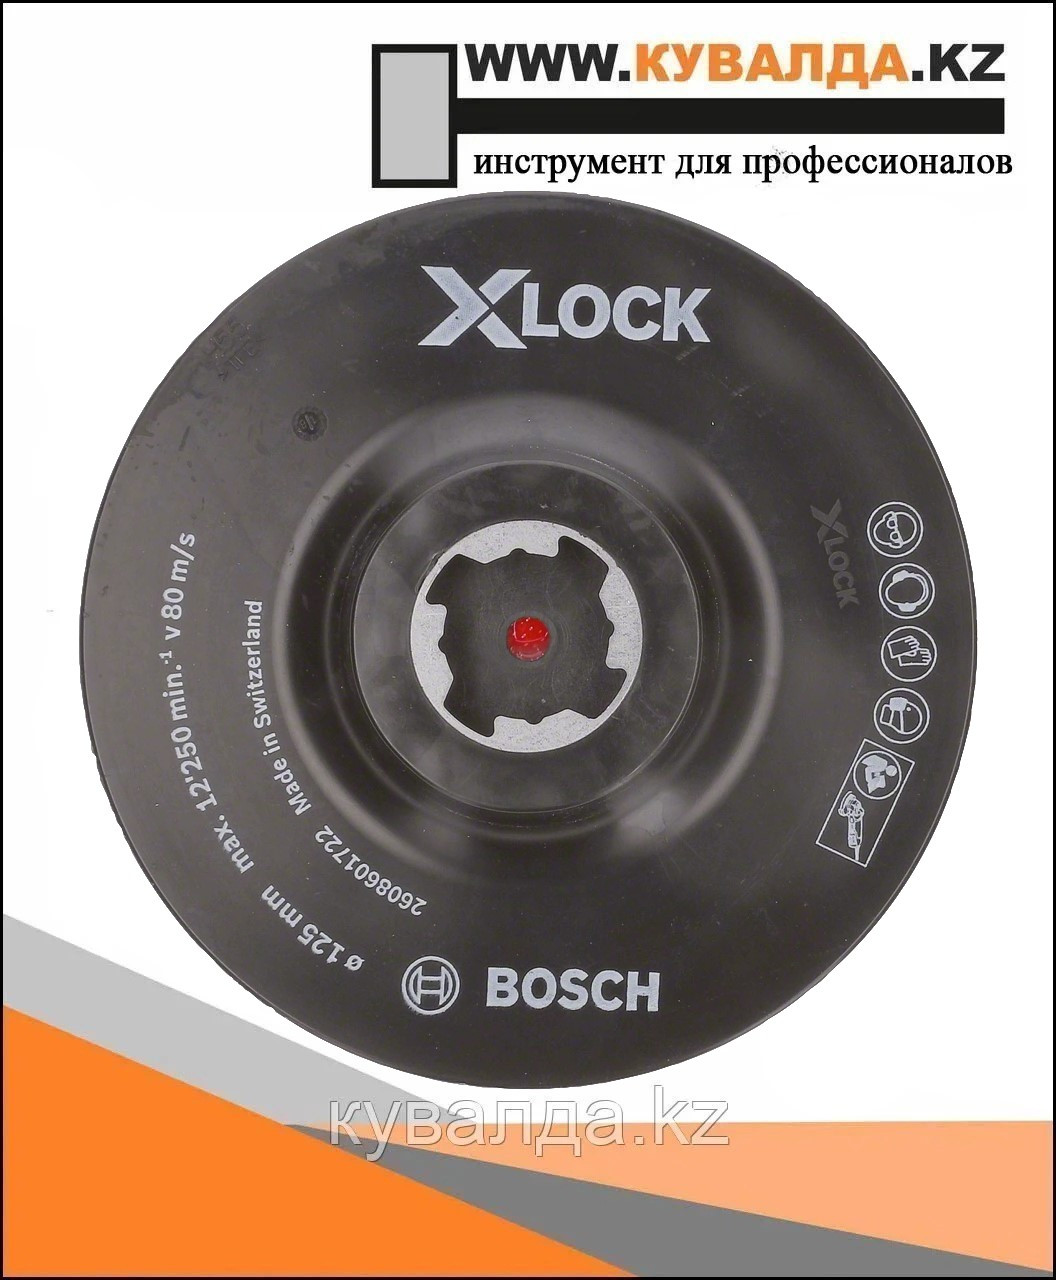 Опорная тарелка Bosch X-LOCK с липучкой 125 мм